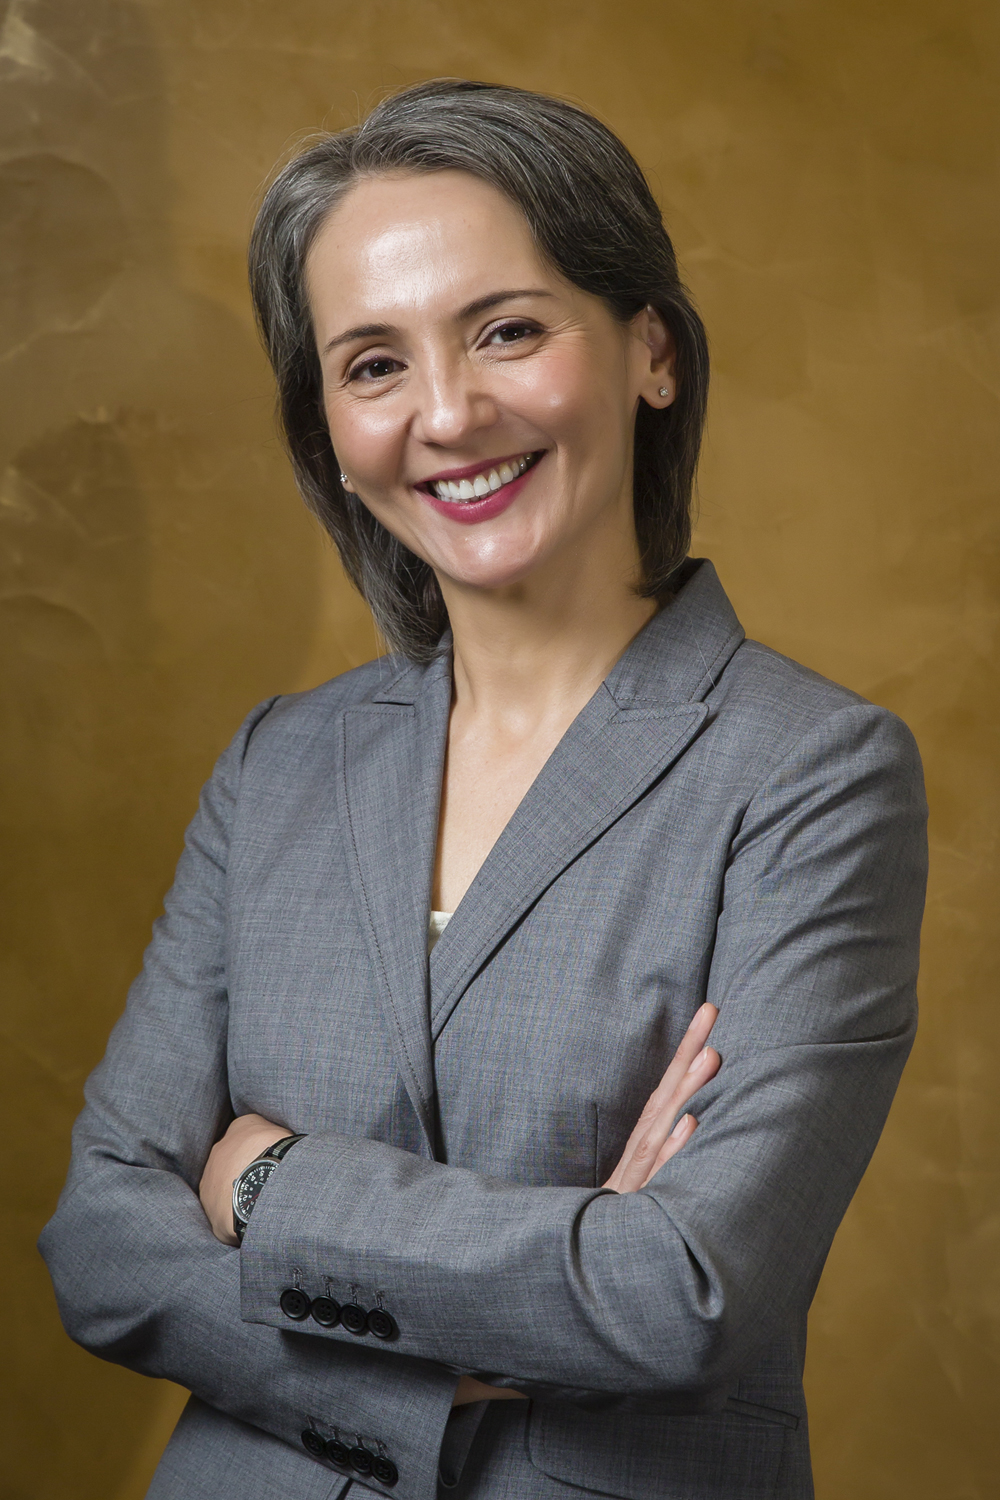 A headshot of Sila Çetinkaya, a member of the Lyle School of Engineering Faculty.